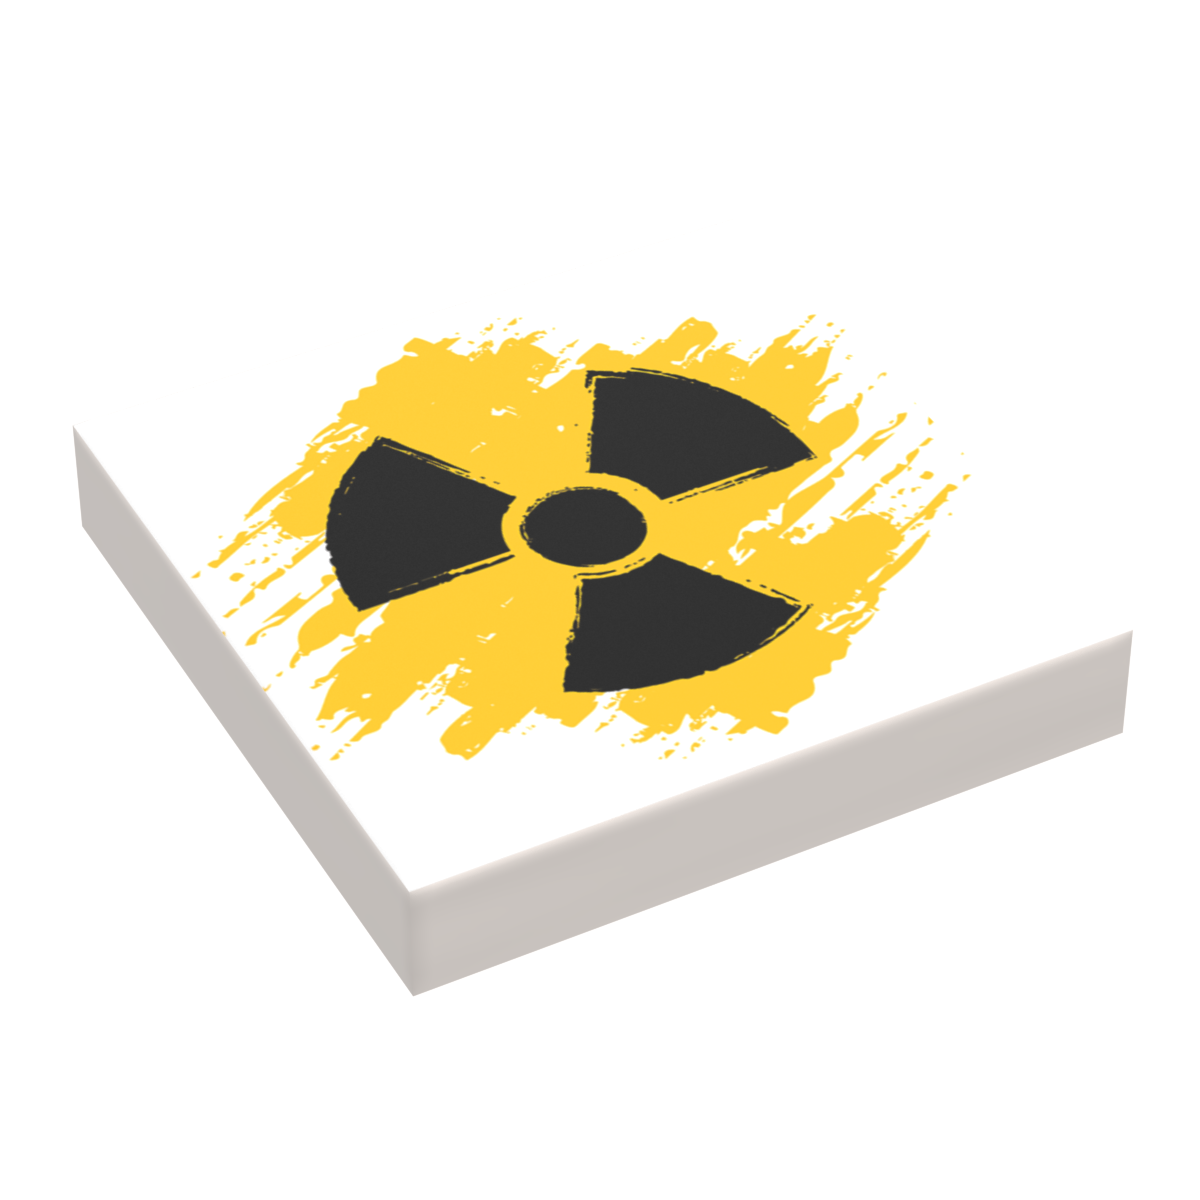 B3 Customs® Radioactive Sign